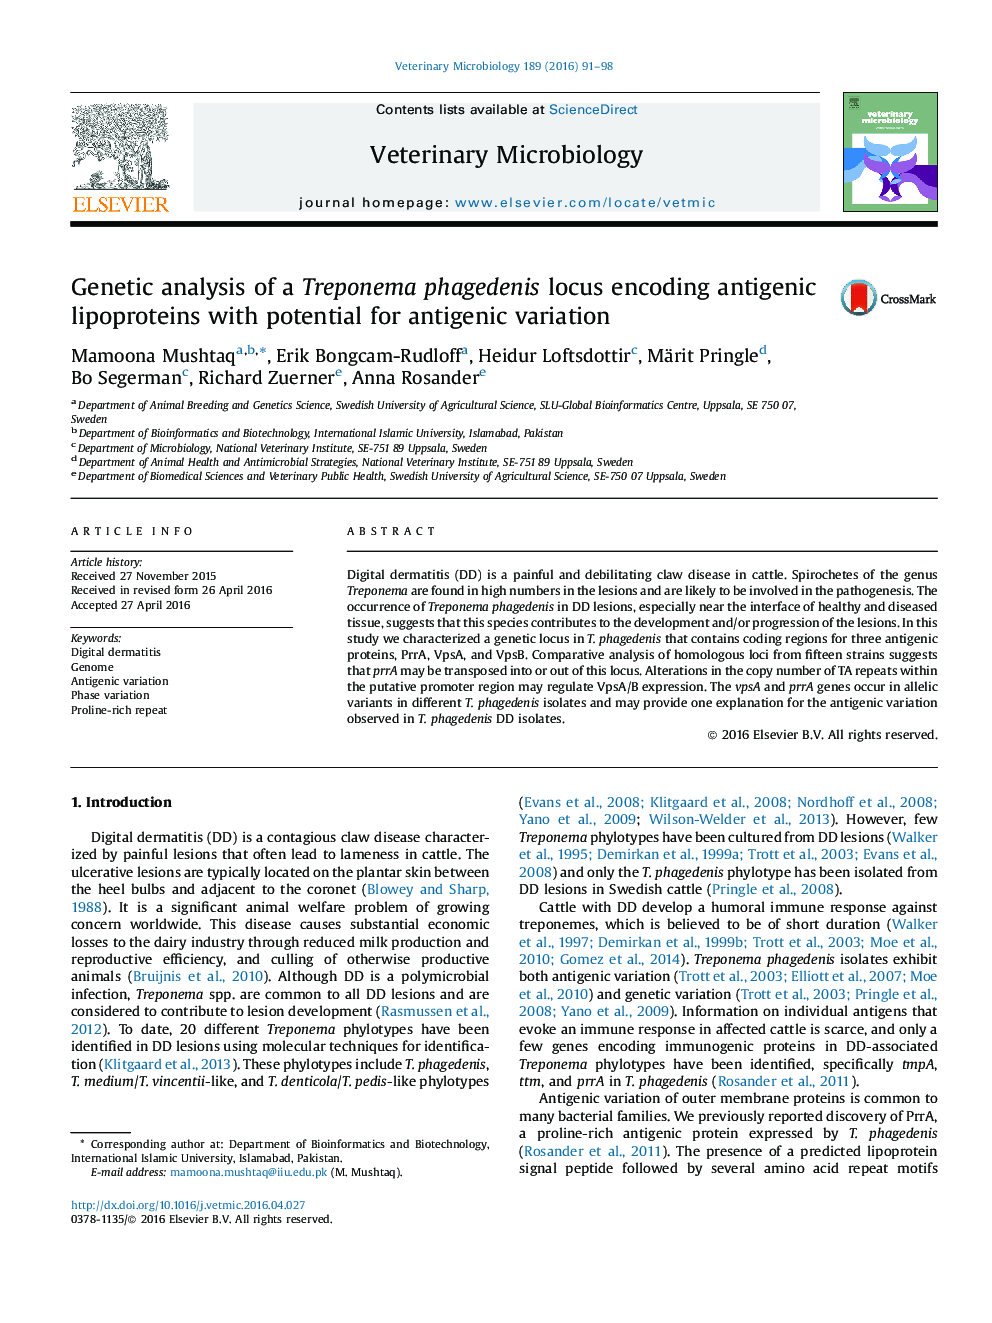 Genetic analysis of a Treponema phagedenis locus encoding antigenic lipoproteins with potential for antigenic variation